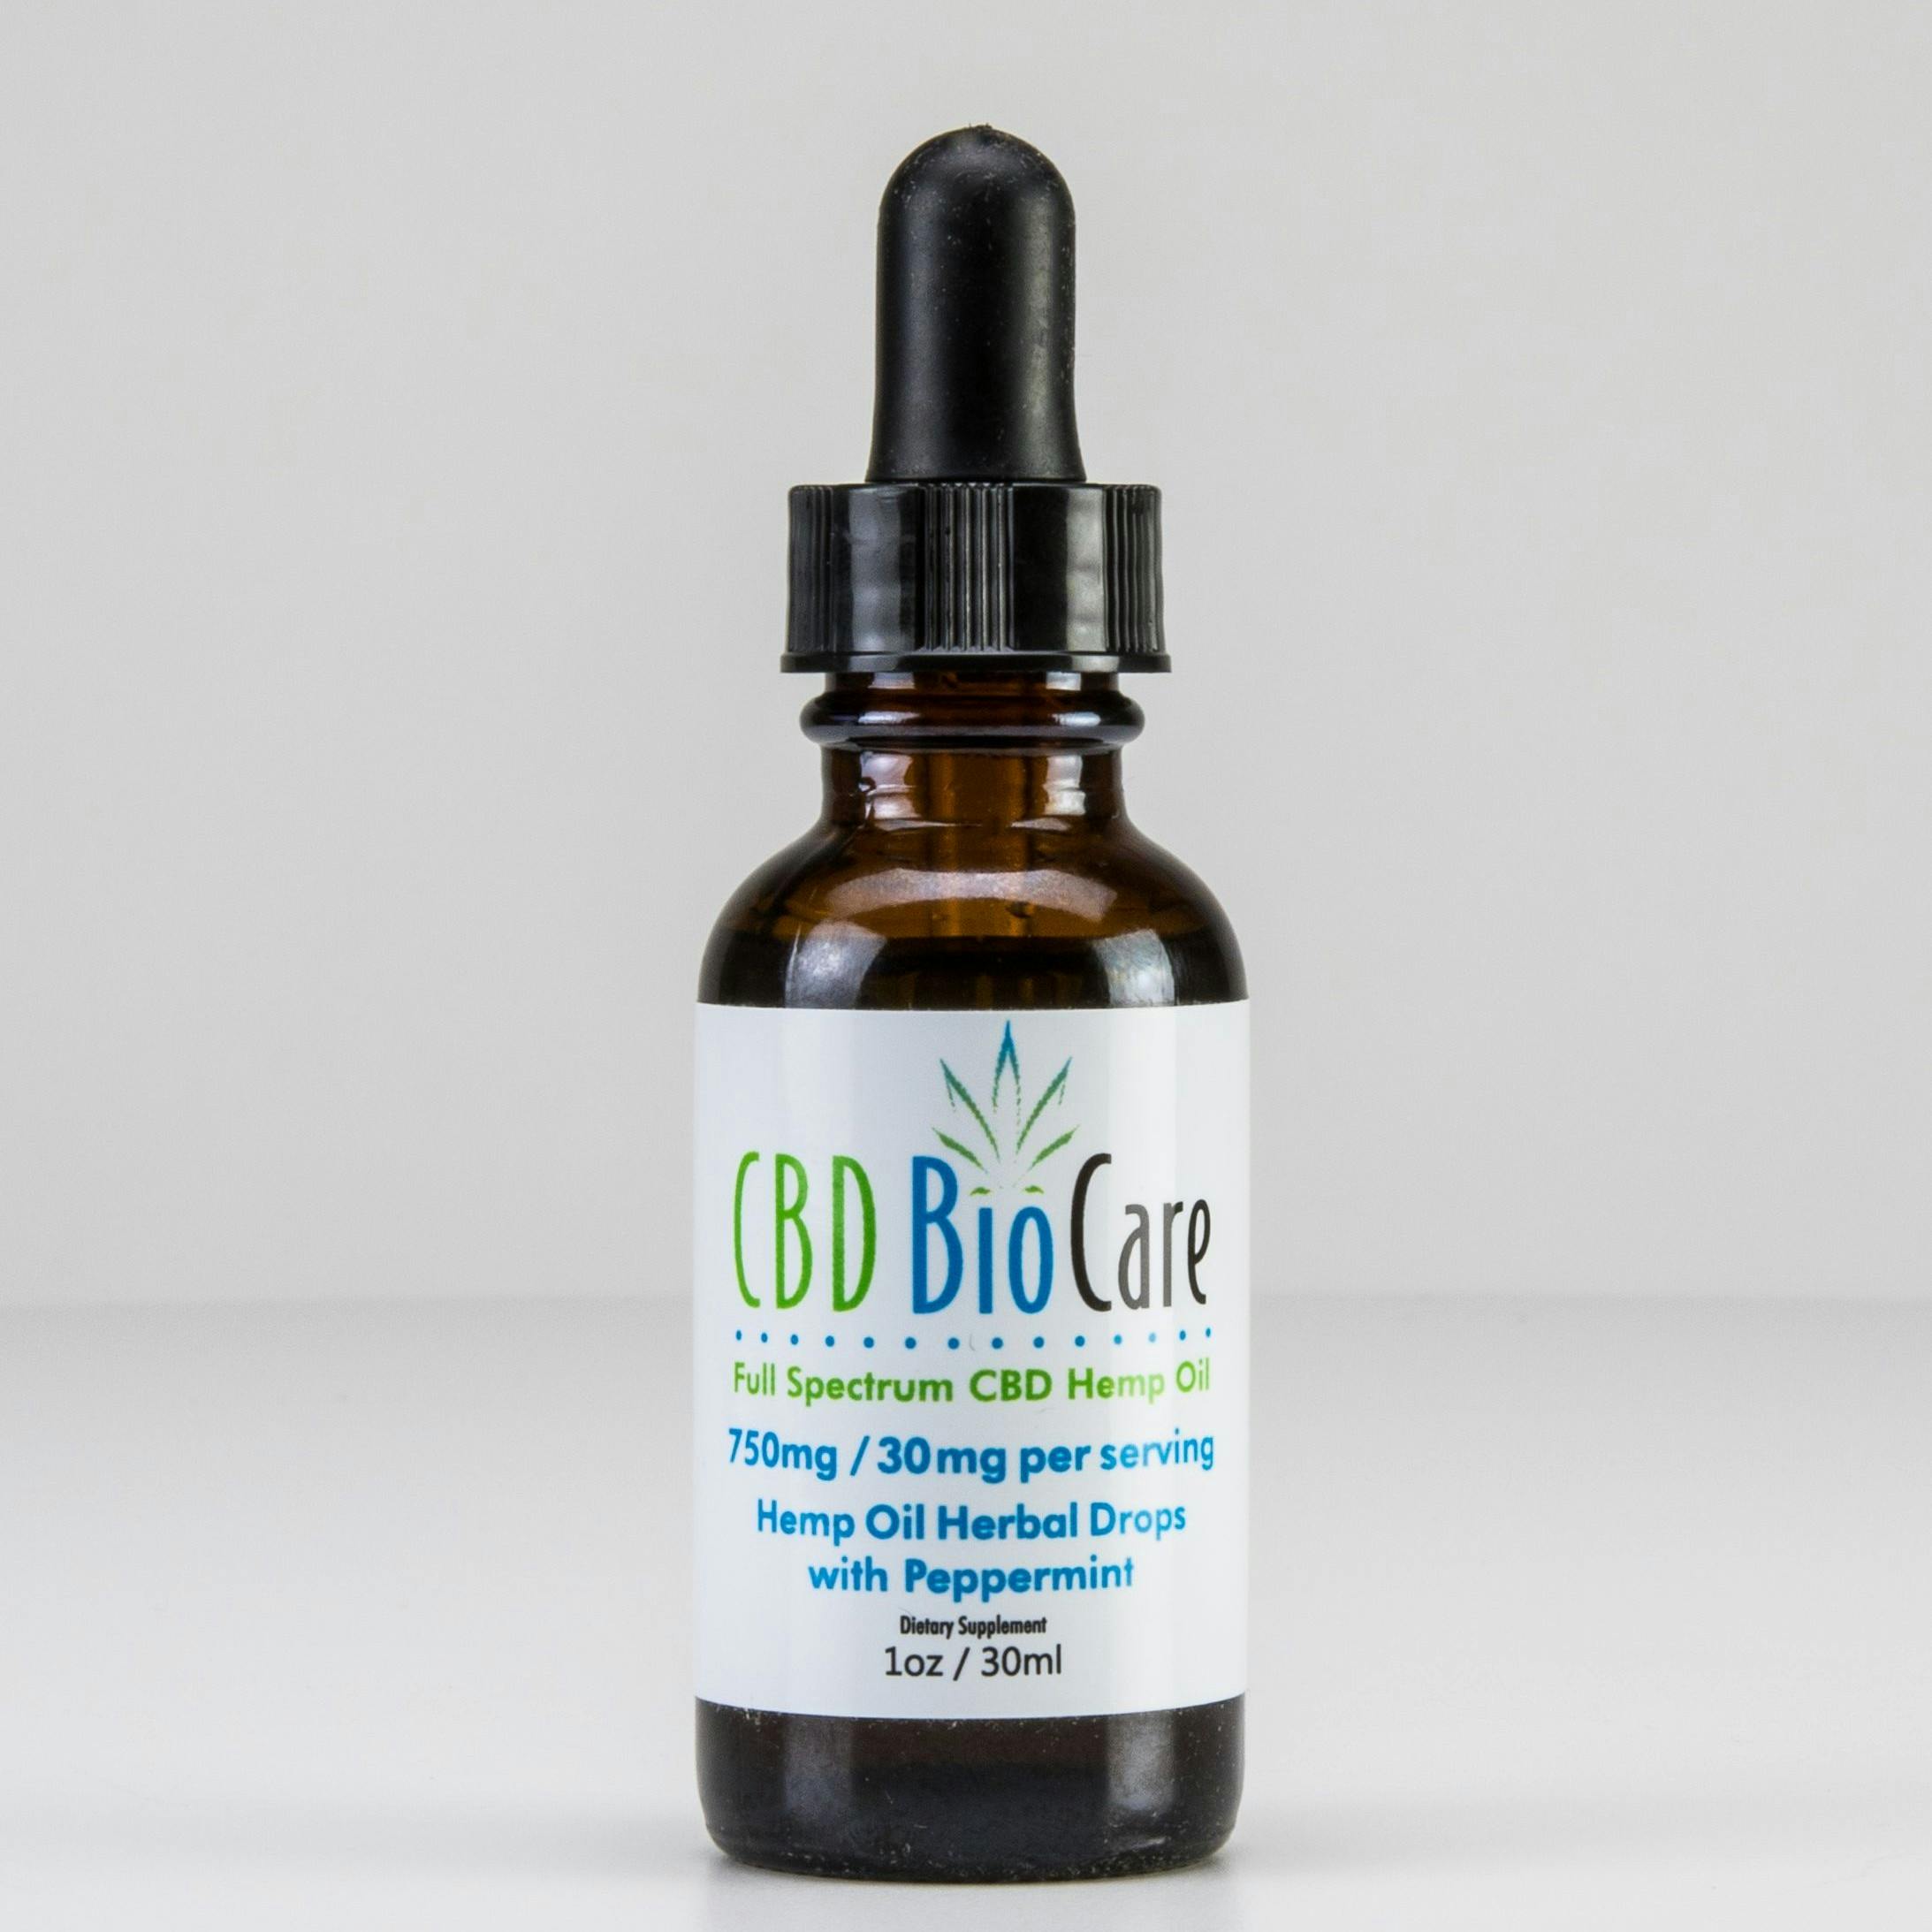 Cbd biocare hemp oil drops